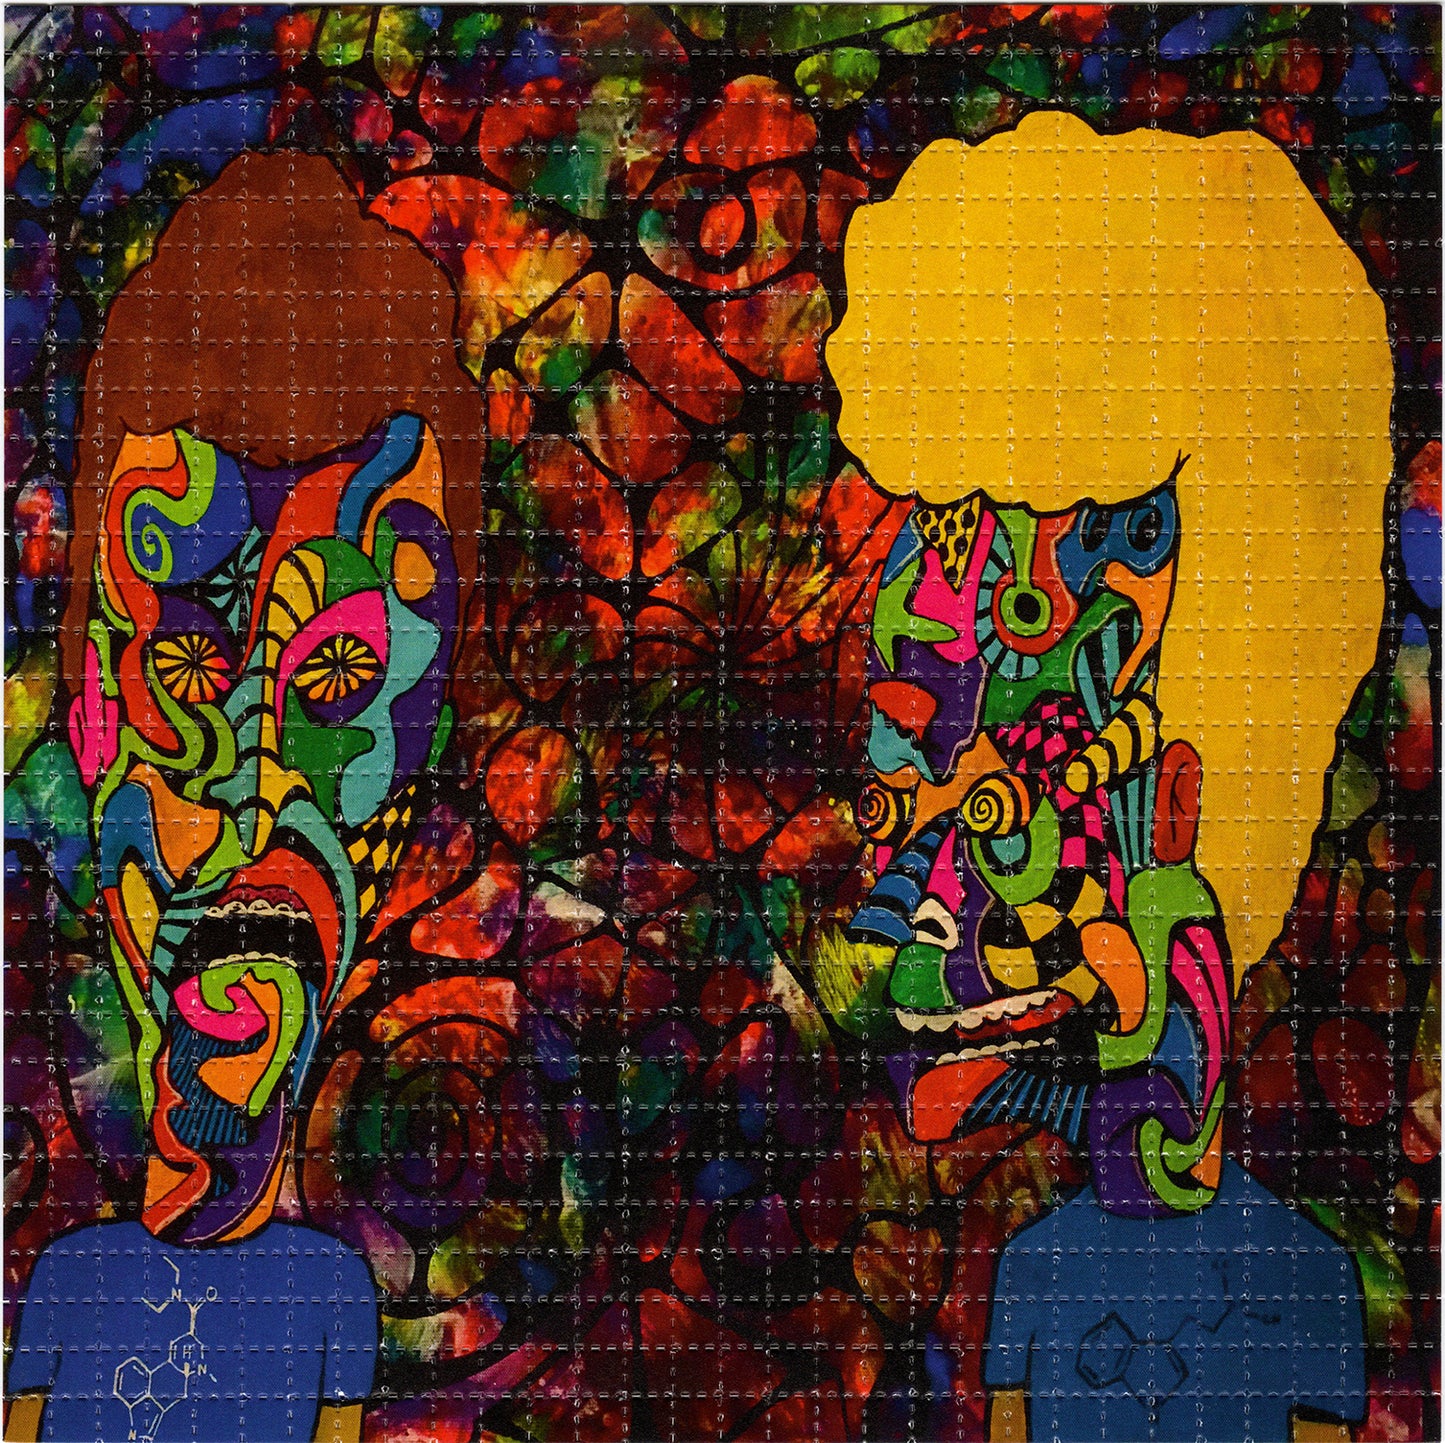 Beavis and Butt head by Visual Fiber SIGNED Limited Edition LSD blotter art print